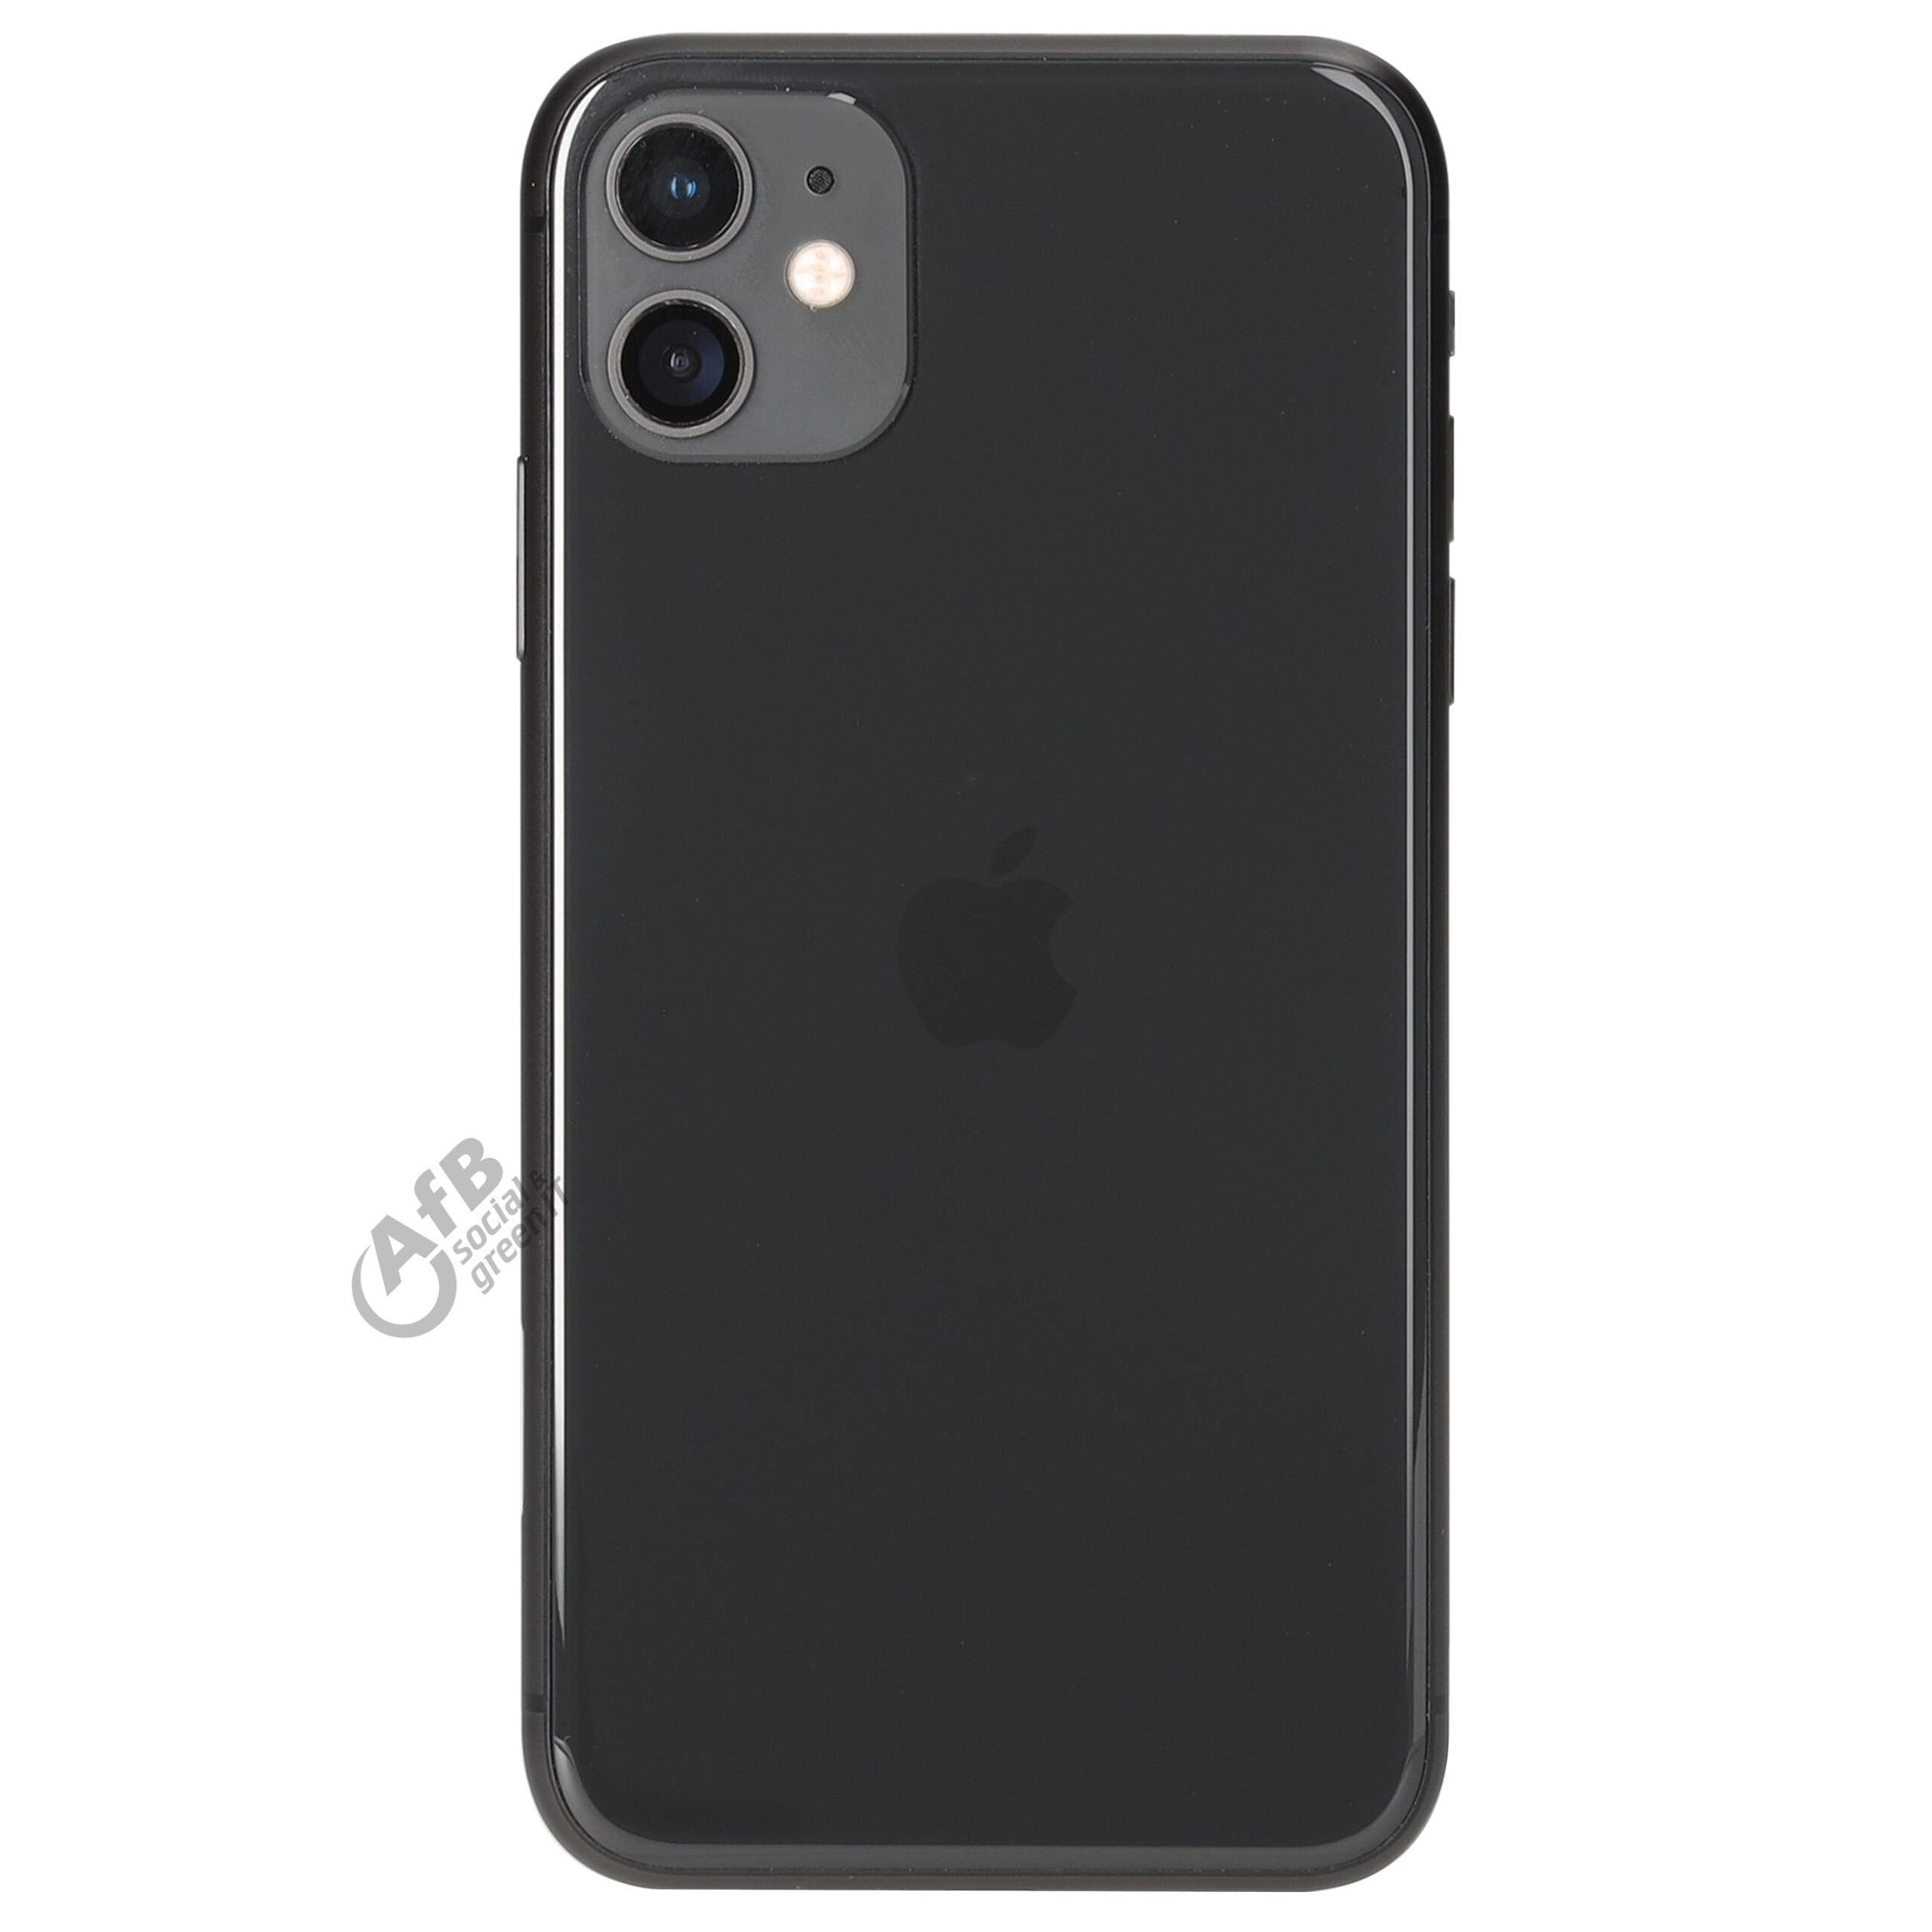 Apple iPhone 11Wie neu – AfB-refurbished